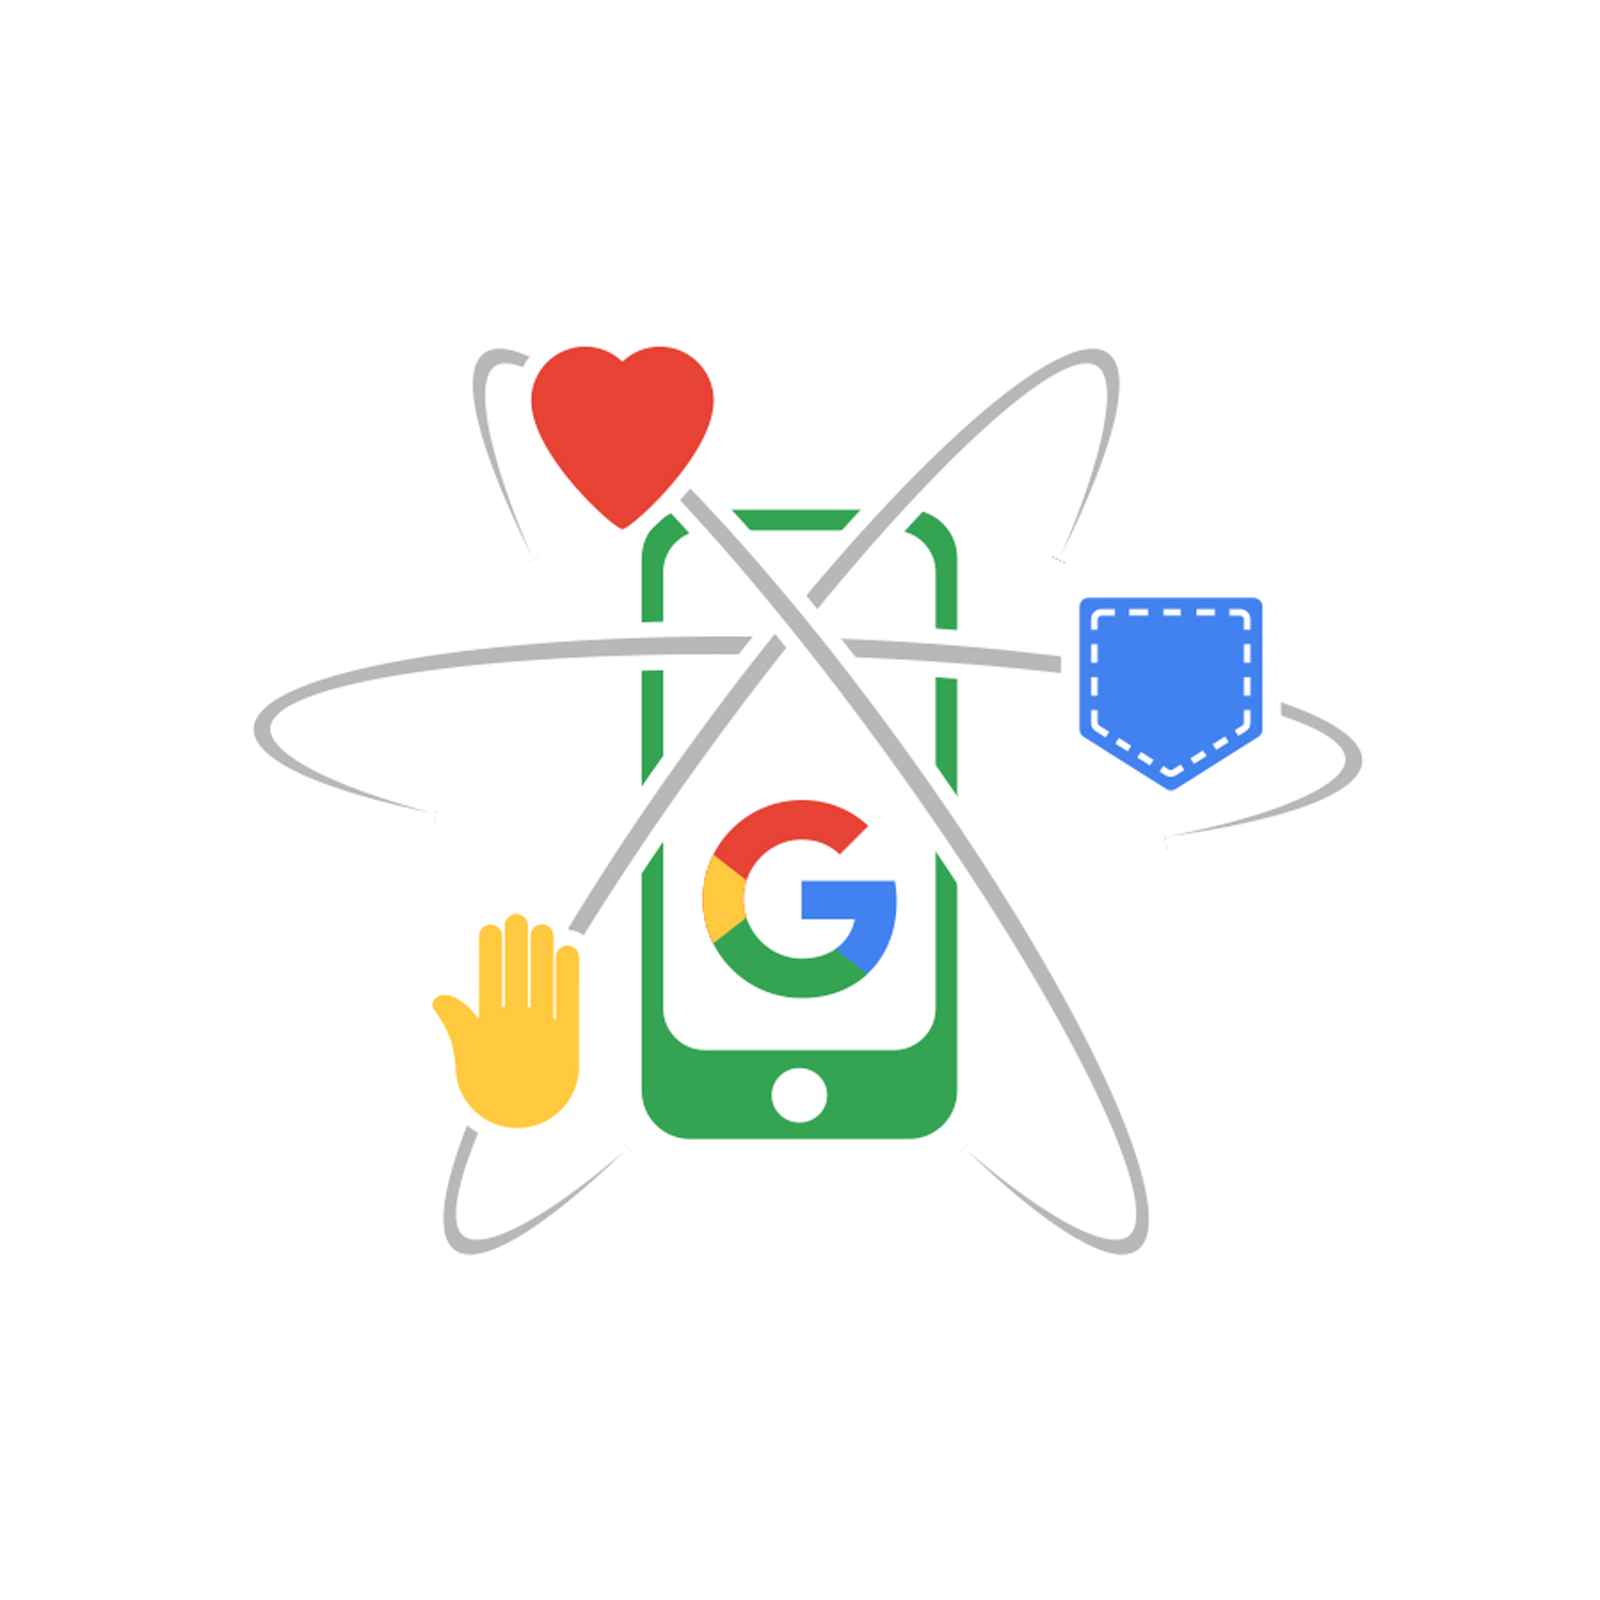 Google+%28Orbits%29 logo design by logo designer Rick+Byrne for your inspiration and for the worlds largest logo competition